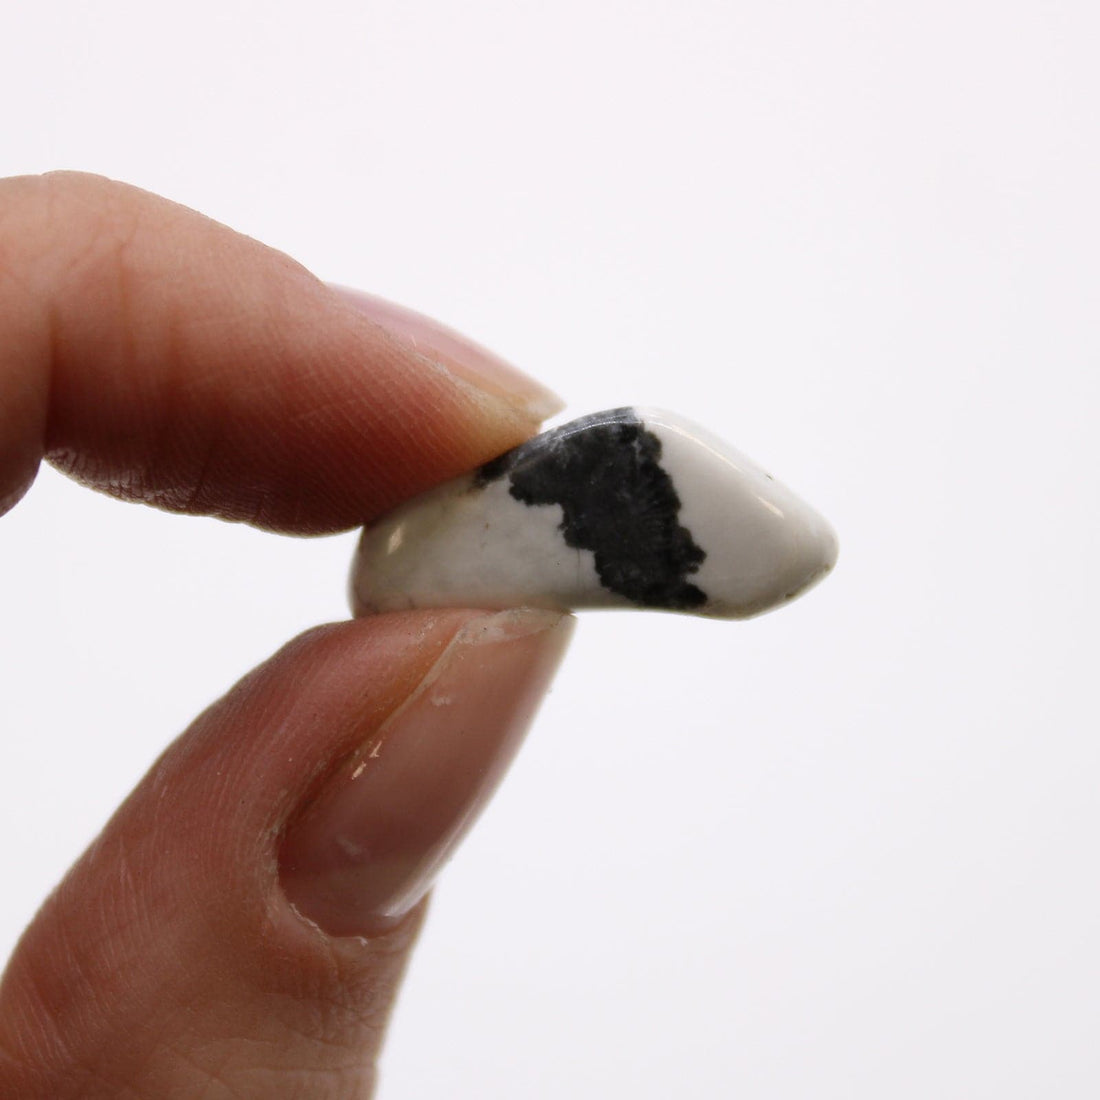 Small African Tumble Stones - White Howlite - Magnesite - best price from Maltashopper.com ATUMBLES-07